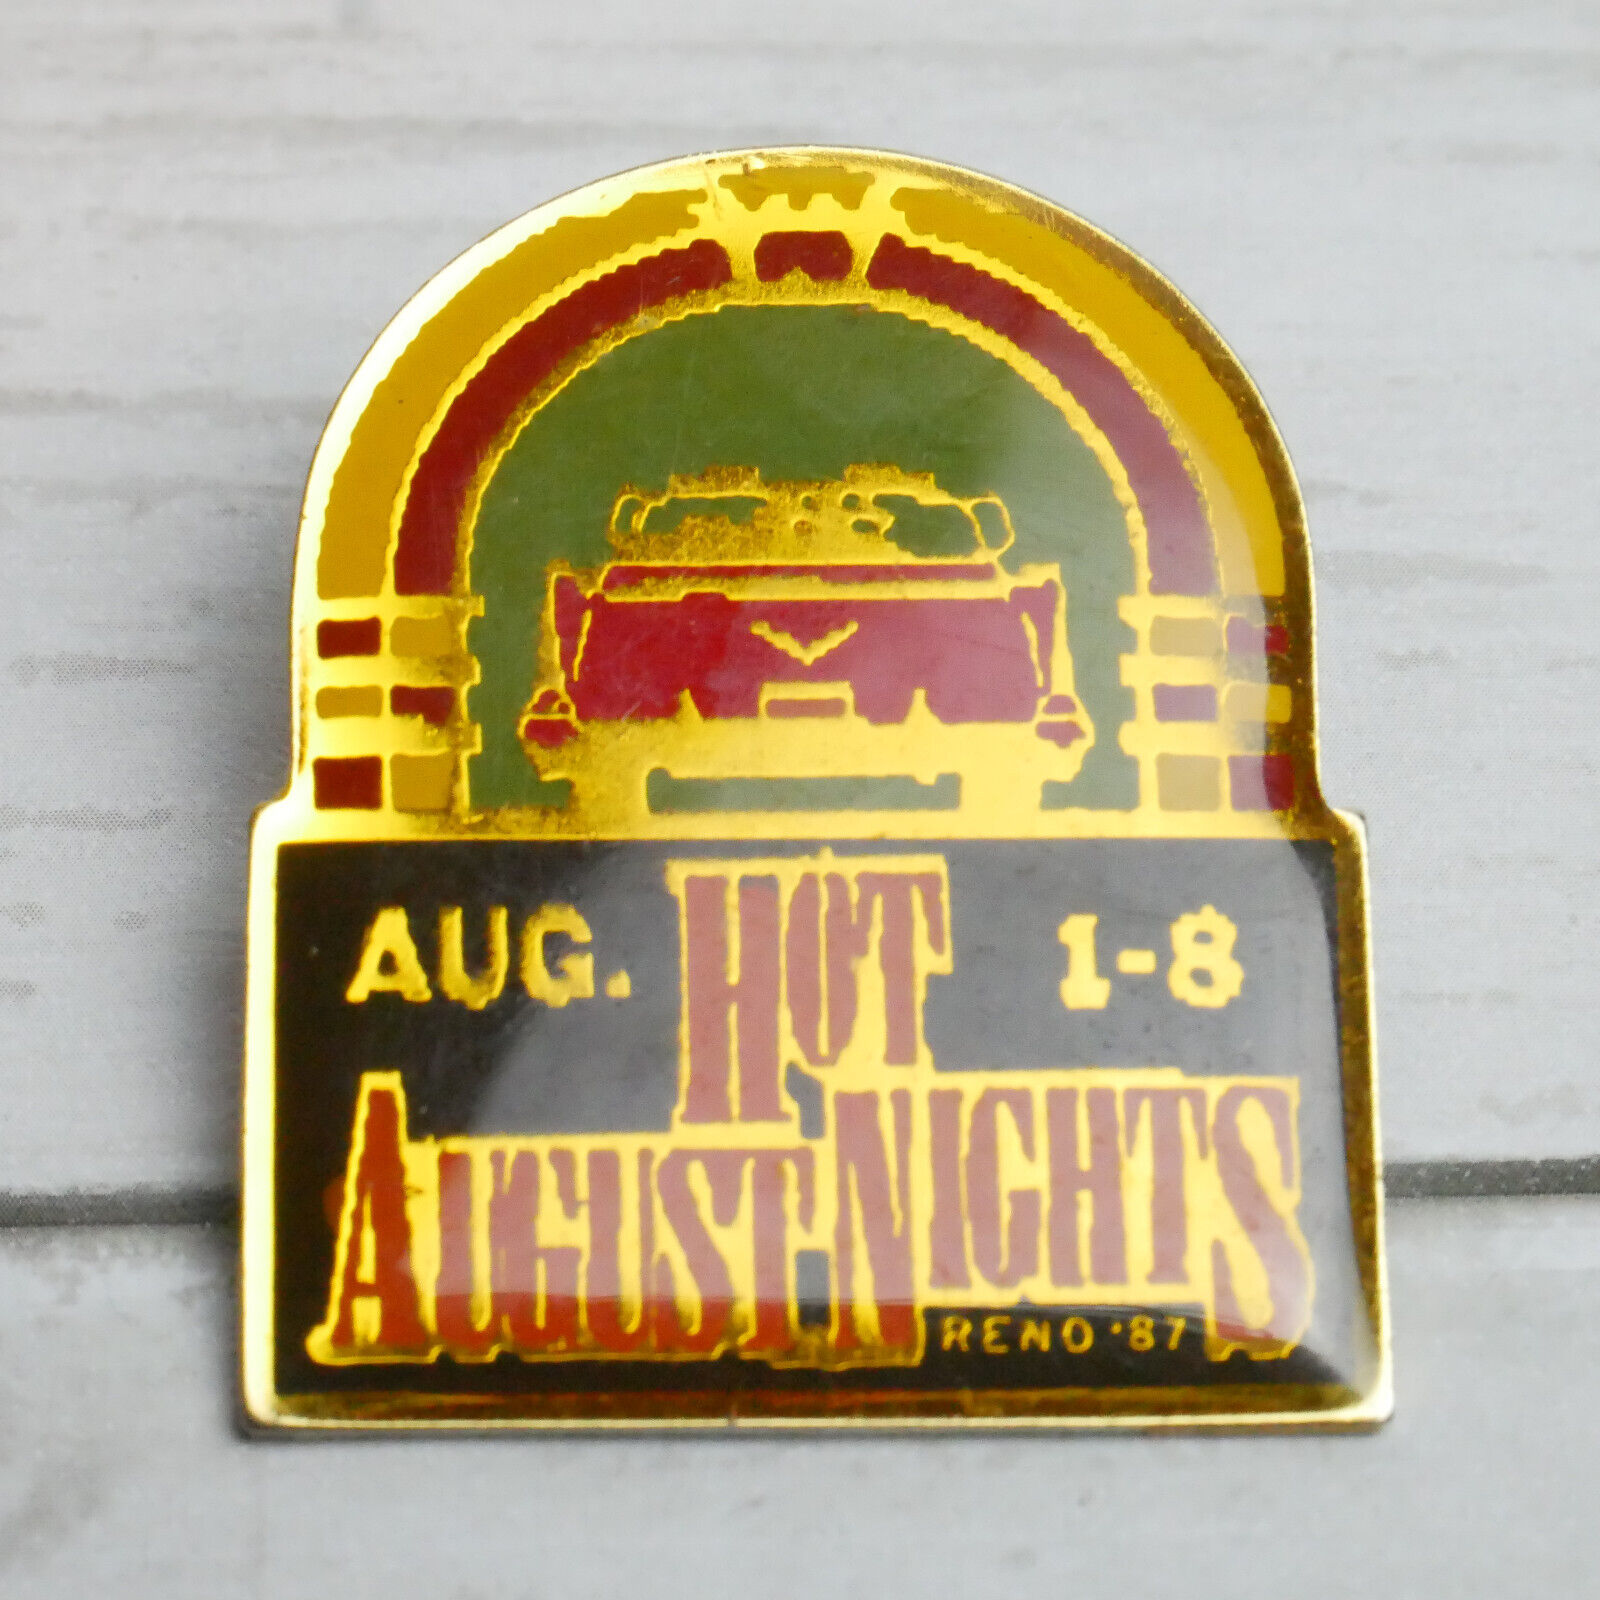 Hot August Nights Classic Cars 1987 Reno Nevada Metal Lapel Pin